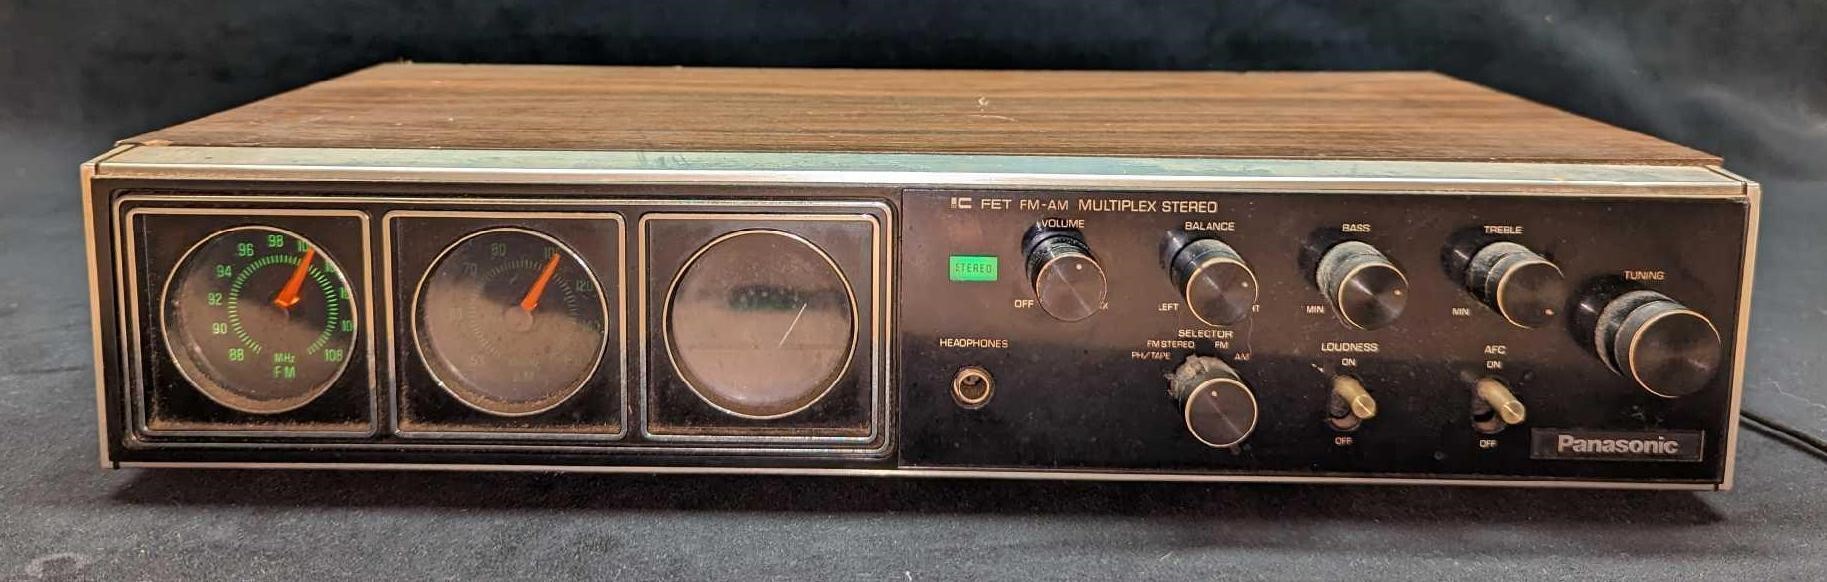 Vintage Panasonic FM AM Stereo RE-7680 Receiver Am